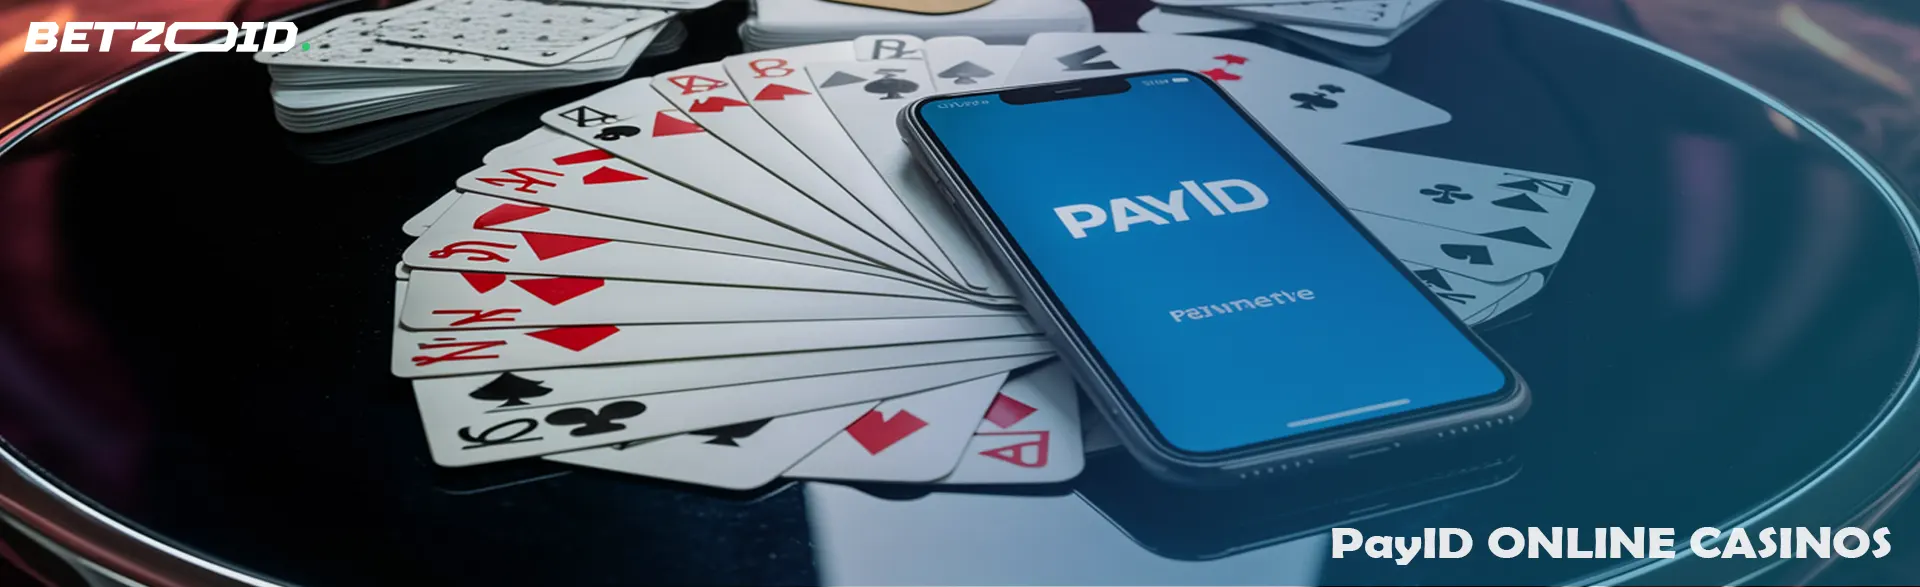 PayID Casinos in Australia